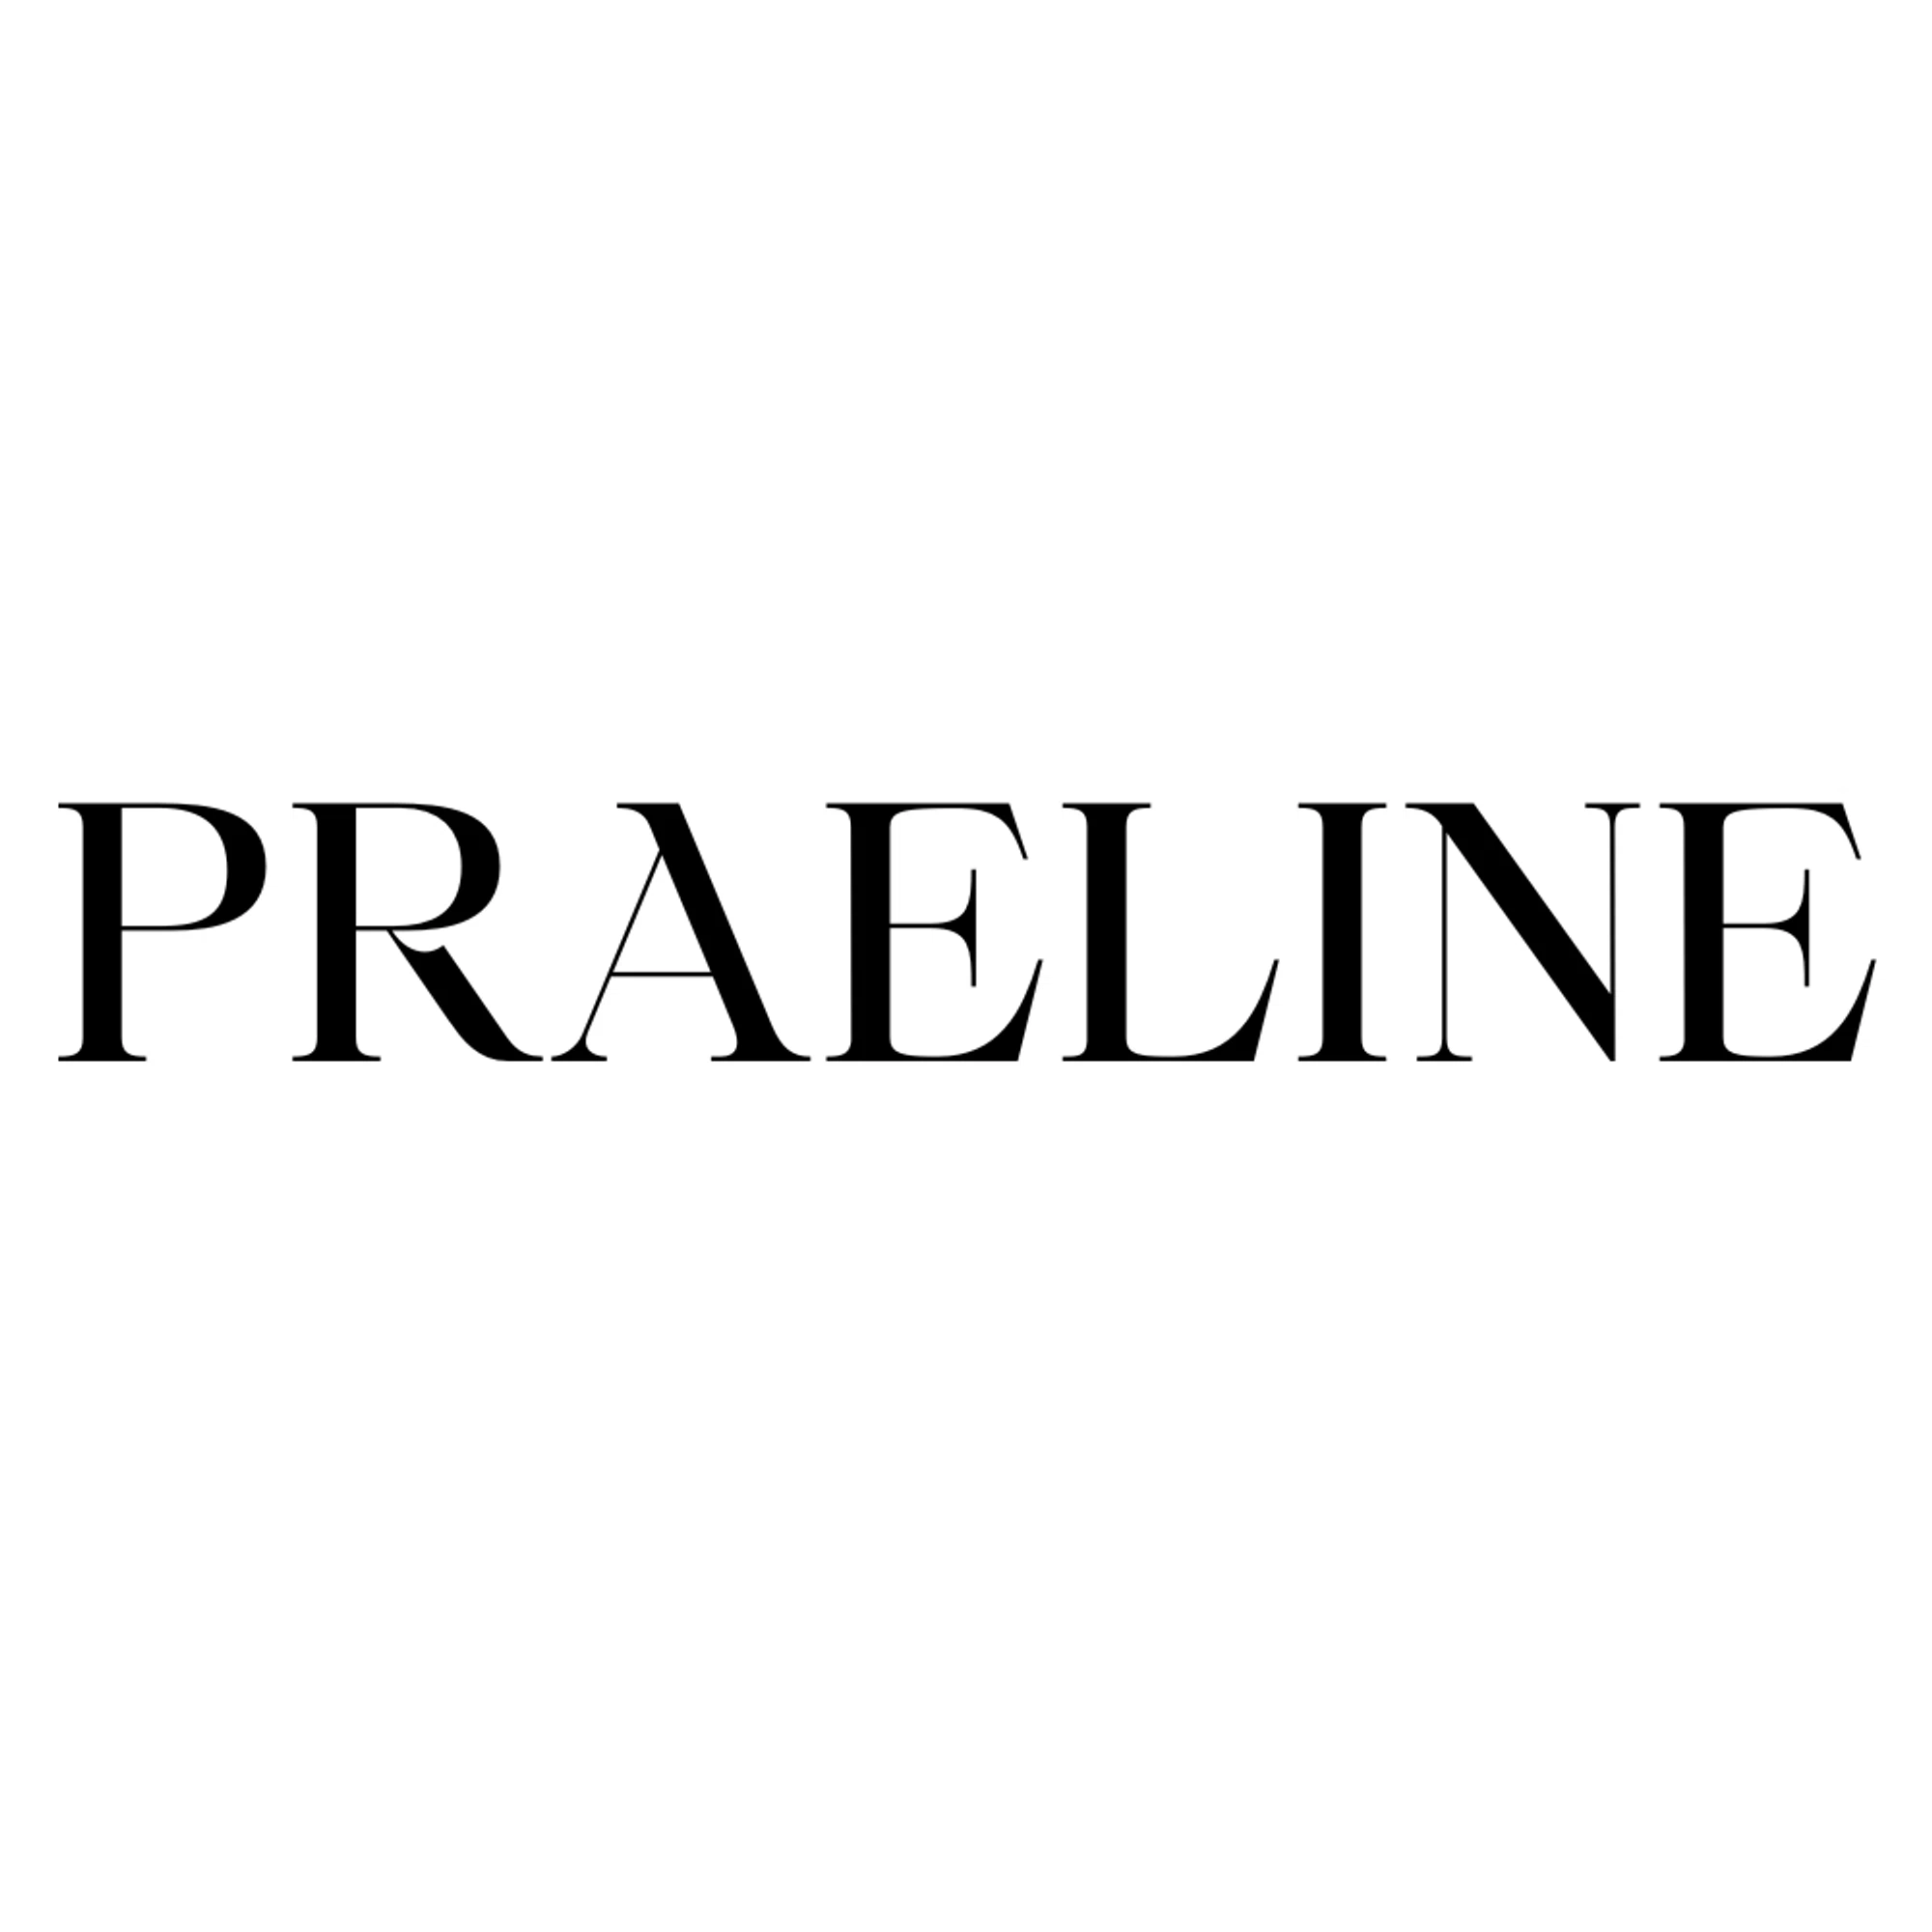 Praeline